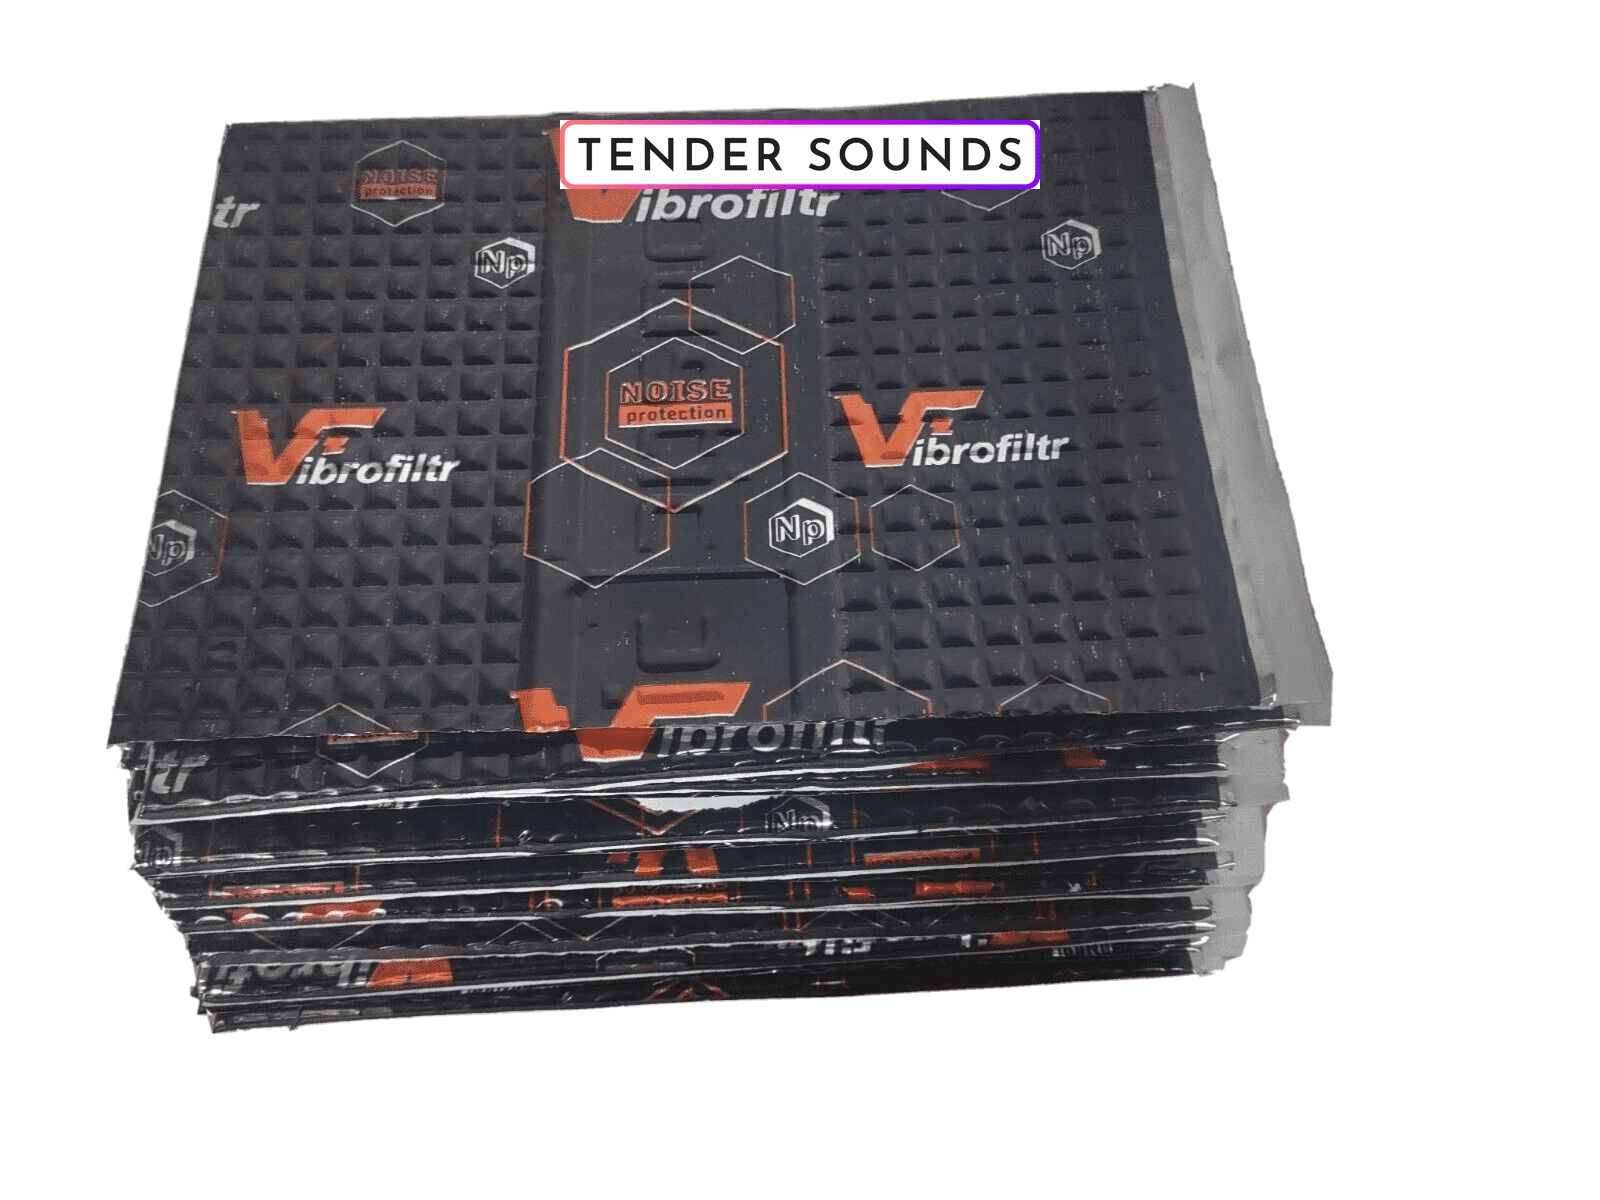 Vibrofiltr 4mm Sound Deadening 500mm x 350mm x 1 sheet